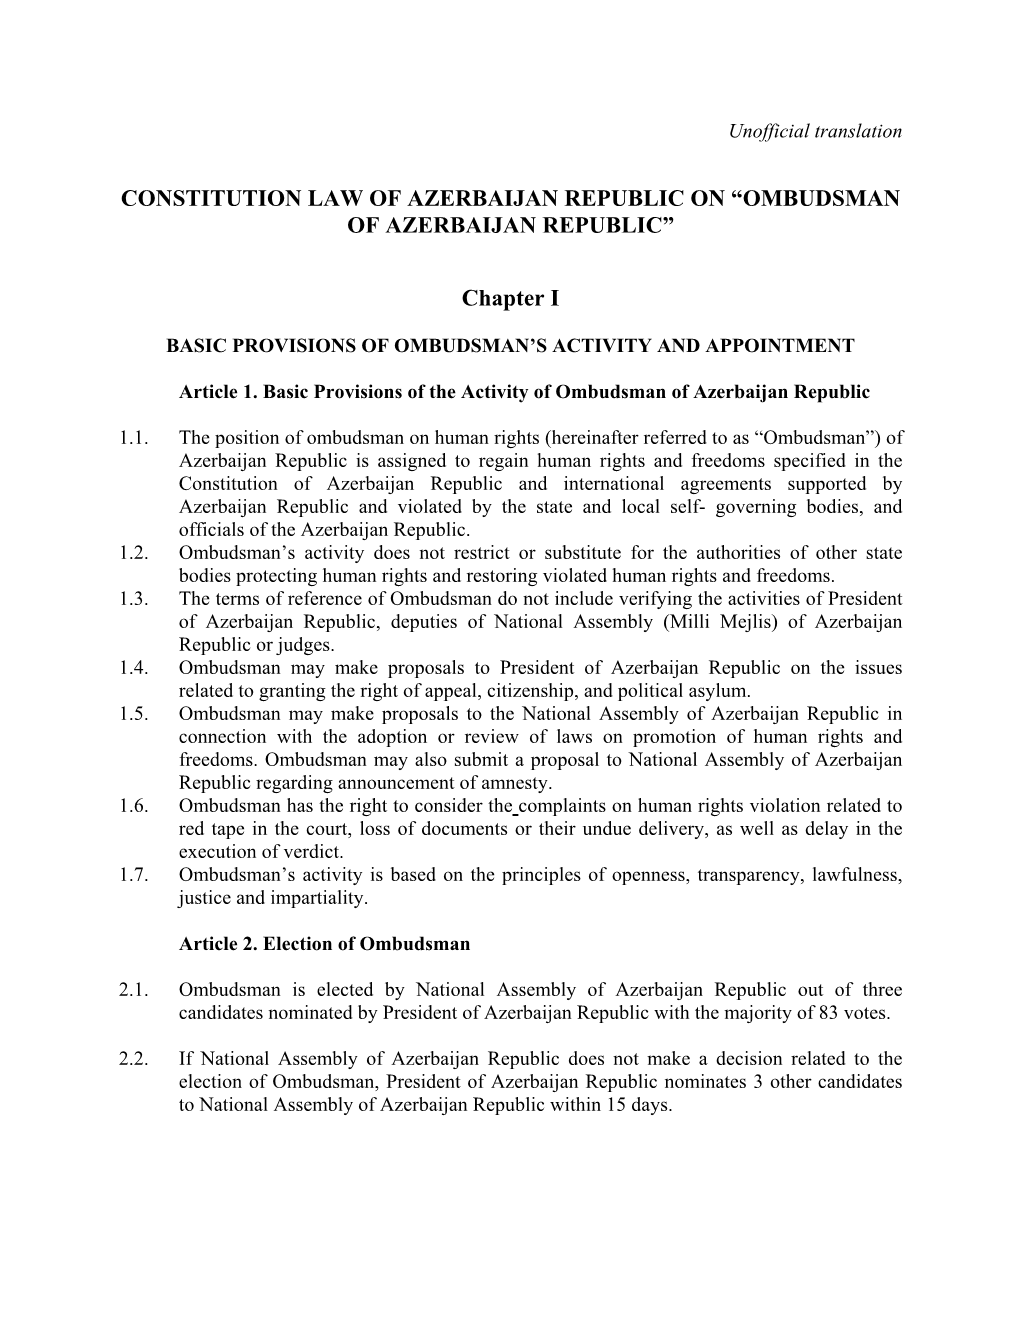 Constitution Law of Azerbaijan Republic on “Ombudsman of Azerbaijan Republic”